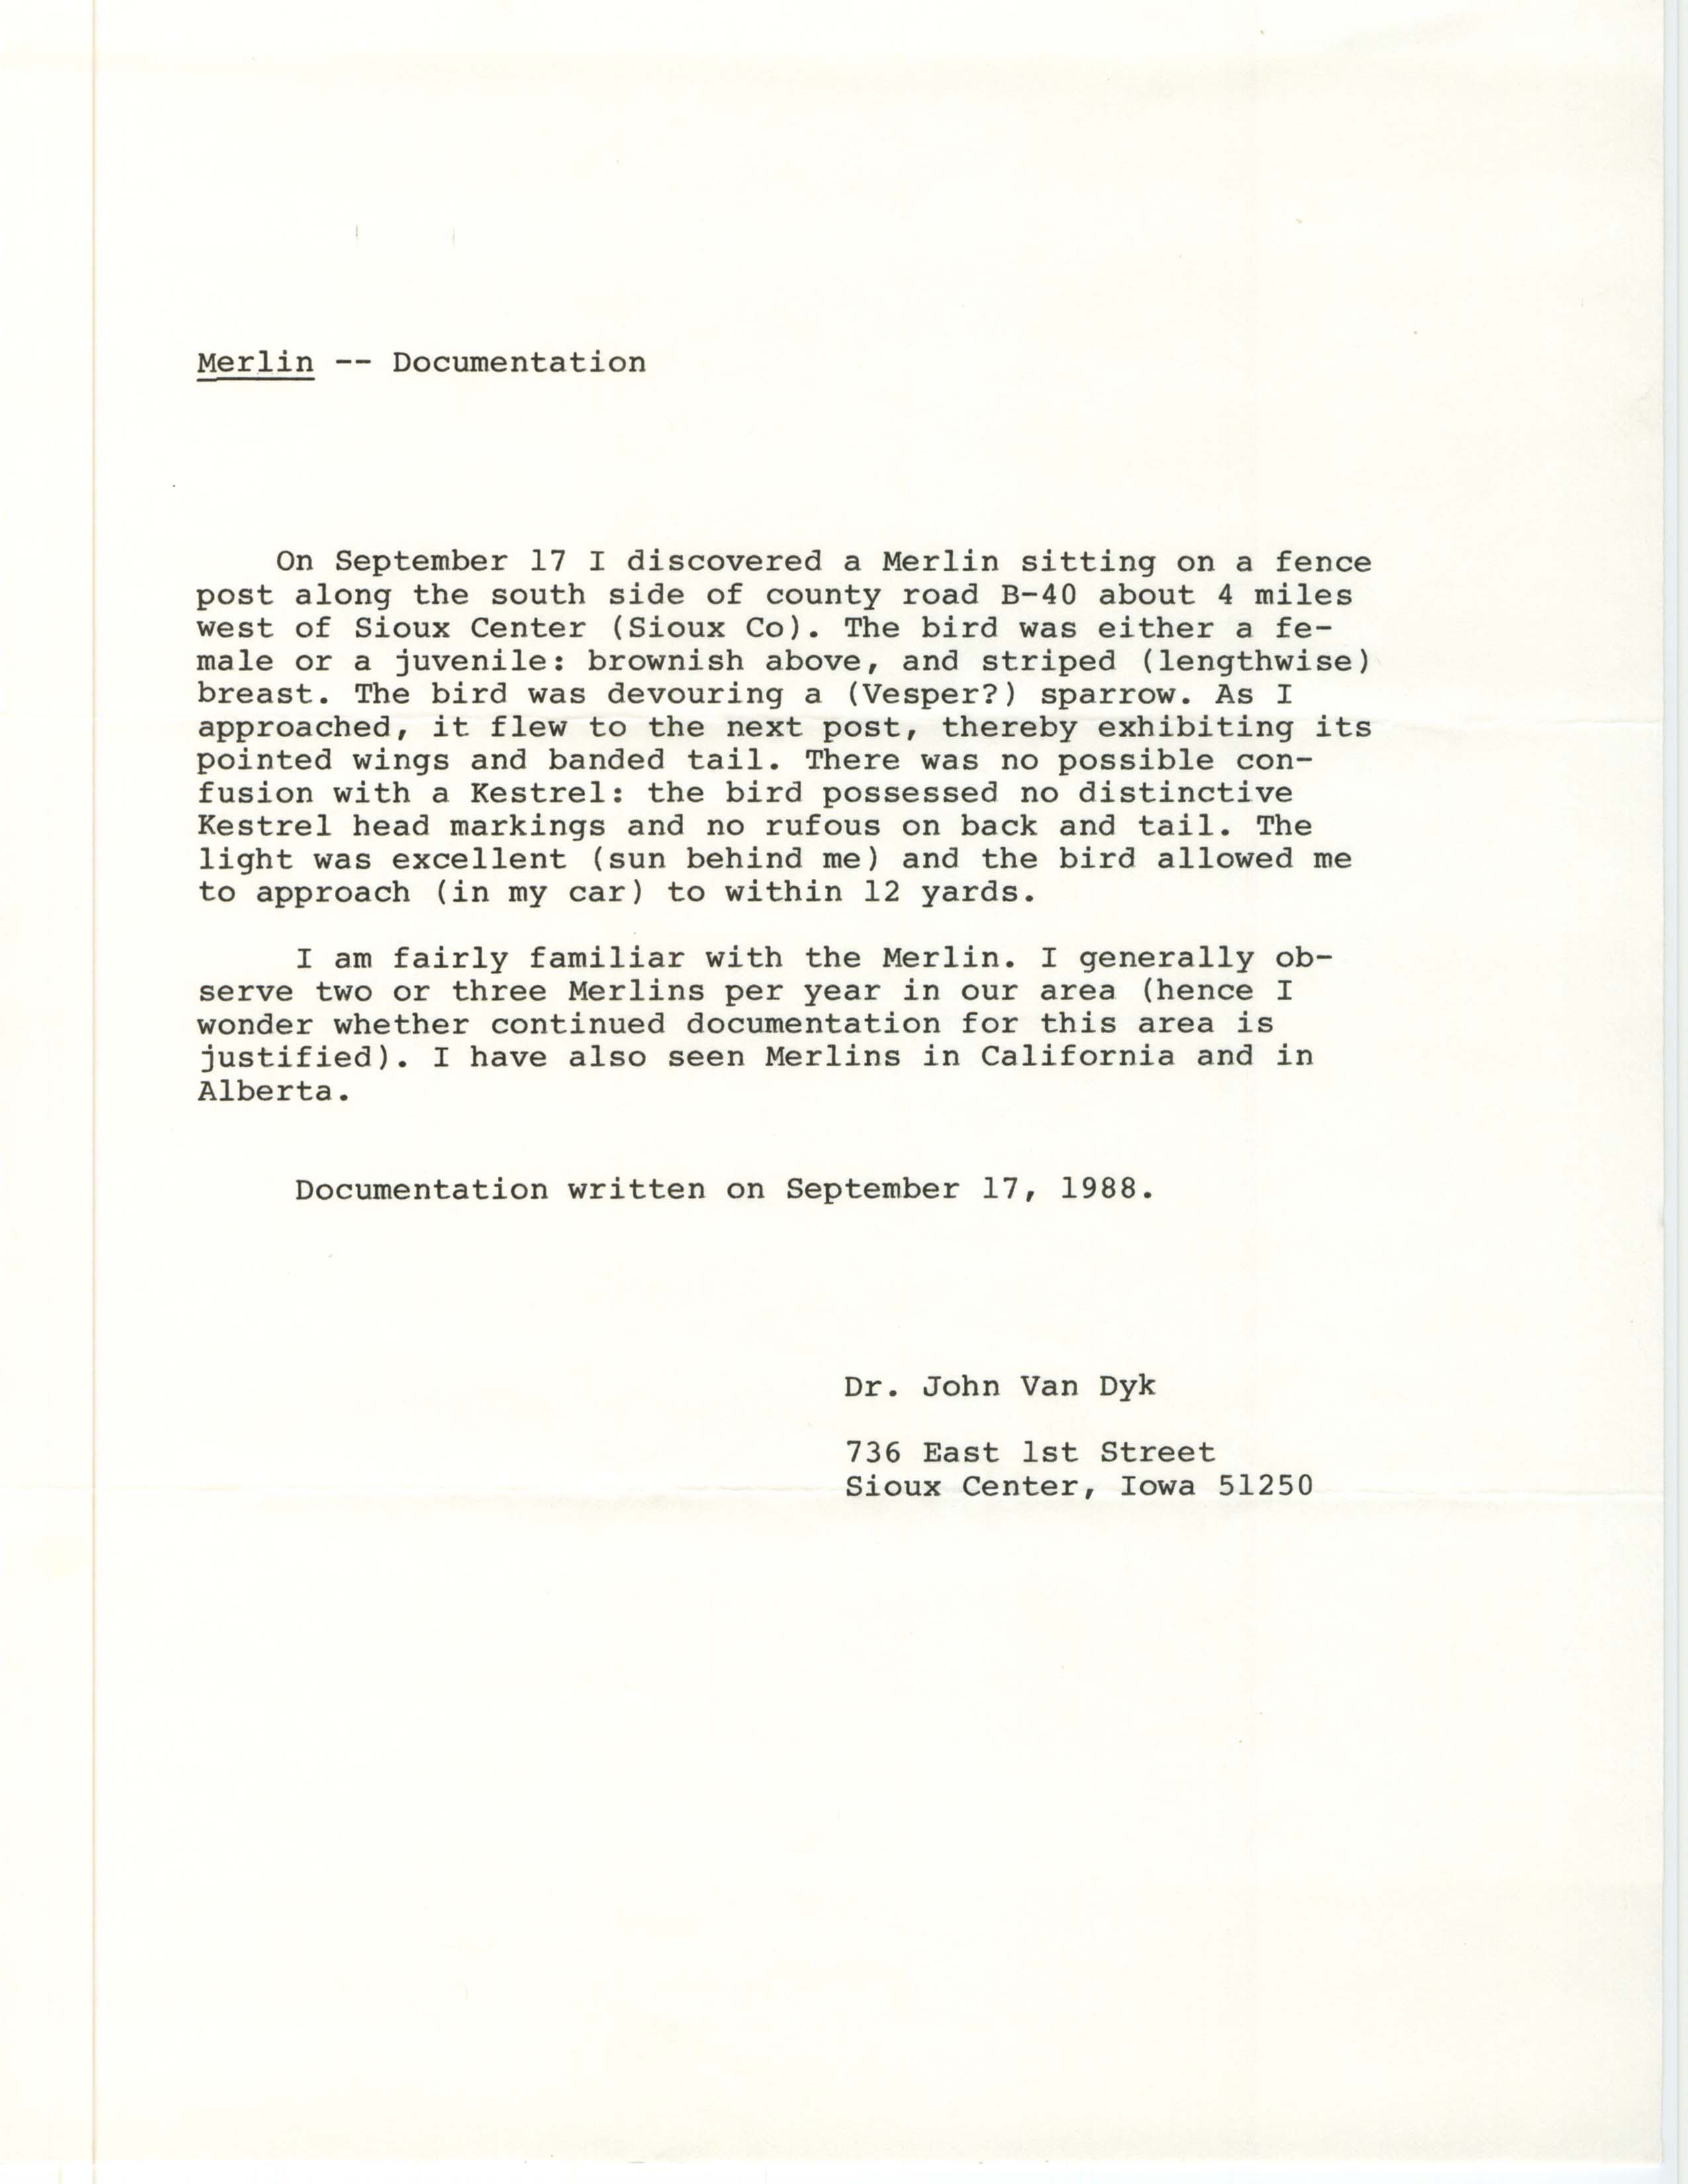 Rare bird documentation form for Merlin west of Sioux Center, 1988